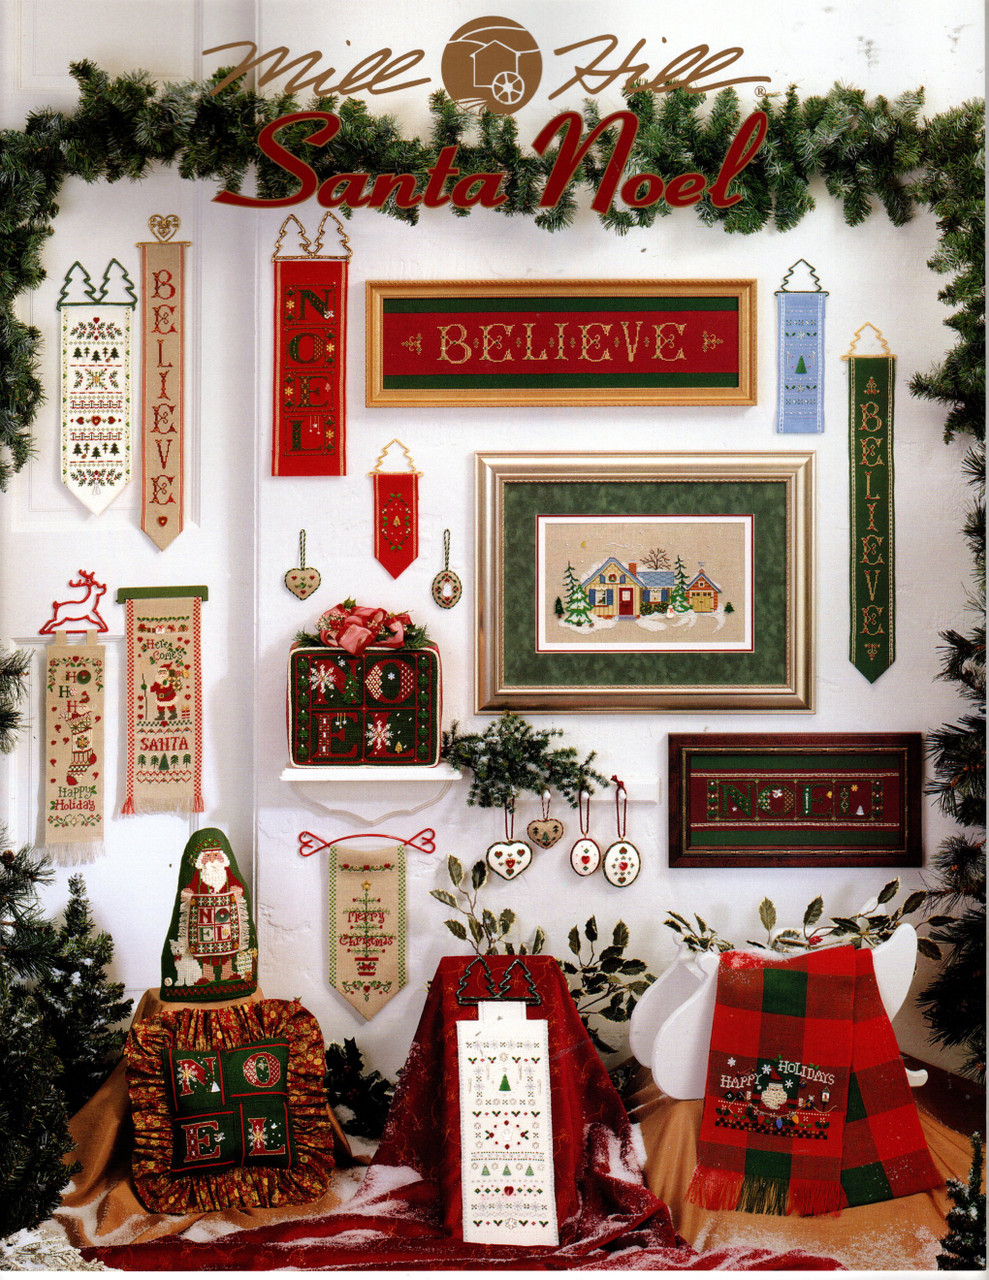 Barbara Ana Designs - Christmas ornament Trio (cross stitch pattern)